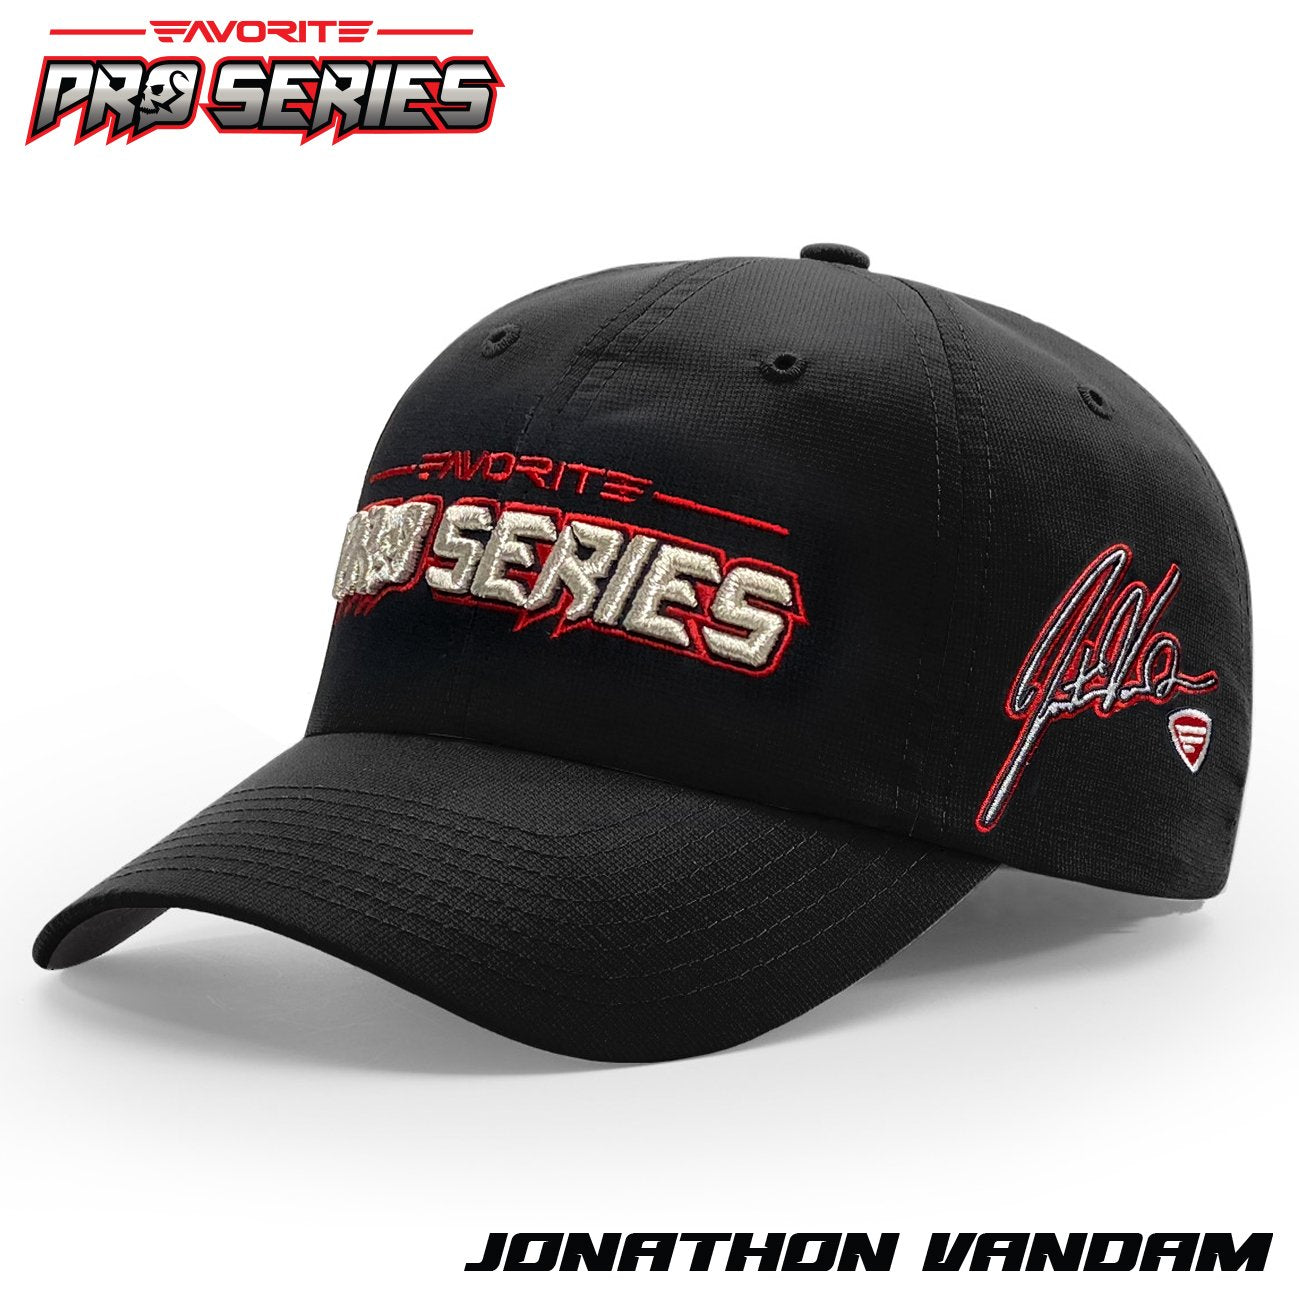 Pro Series Hat